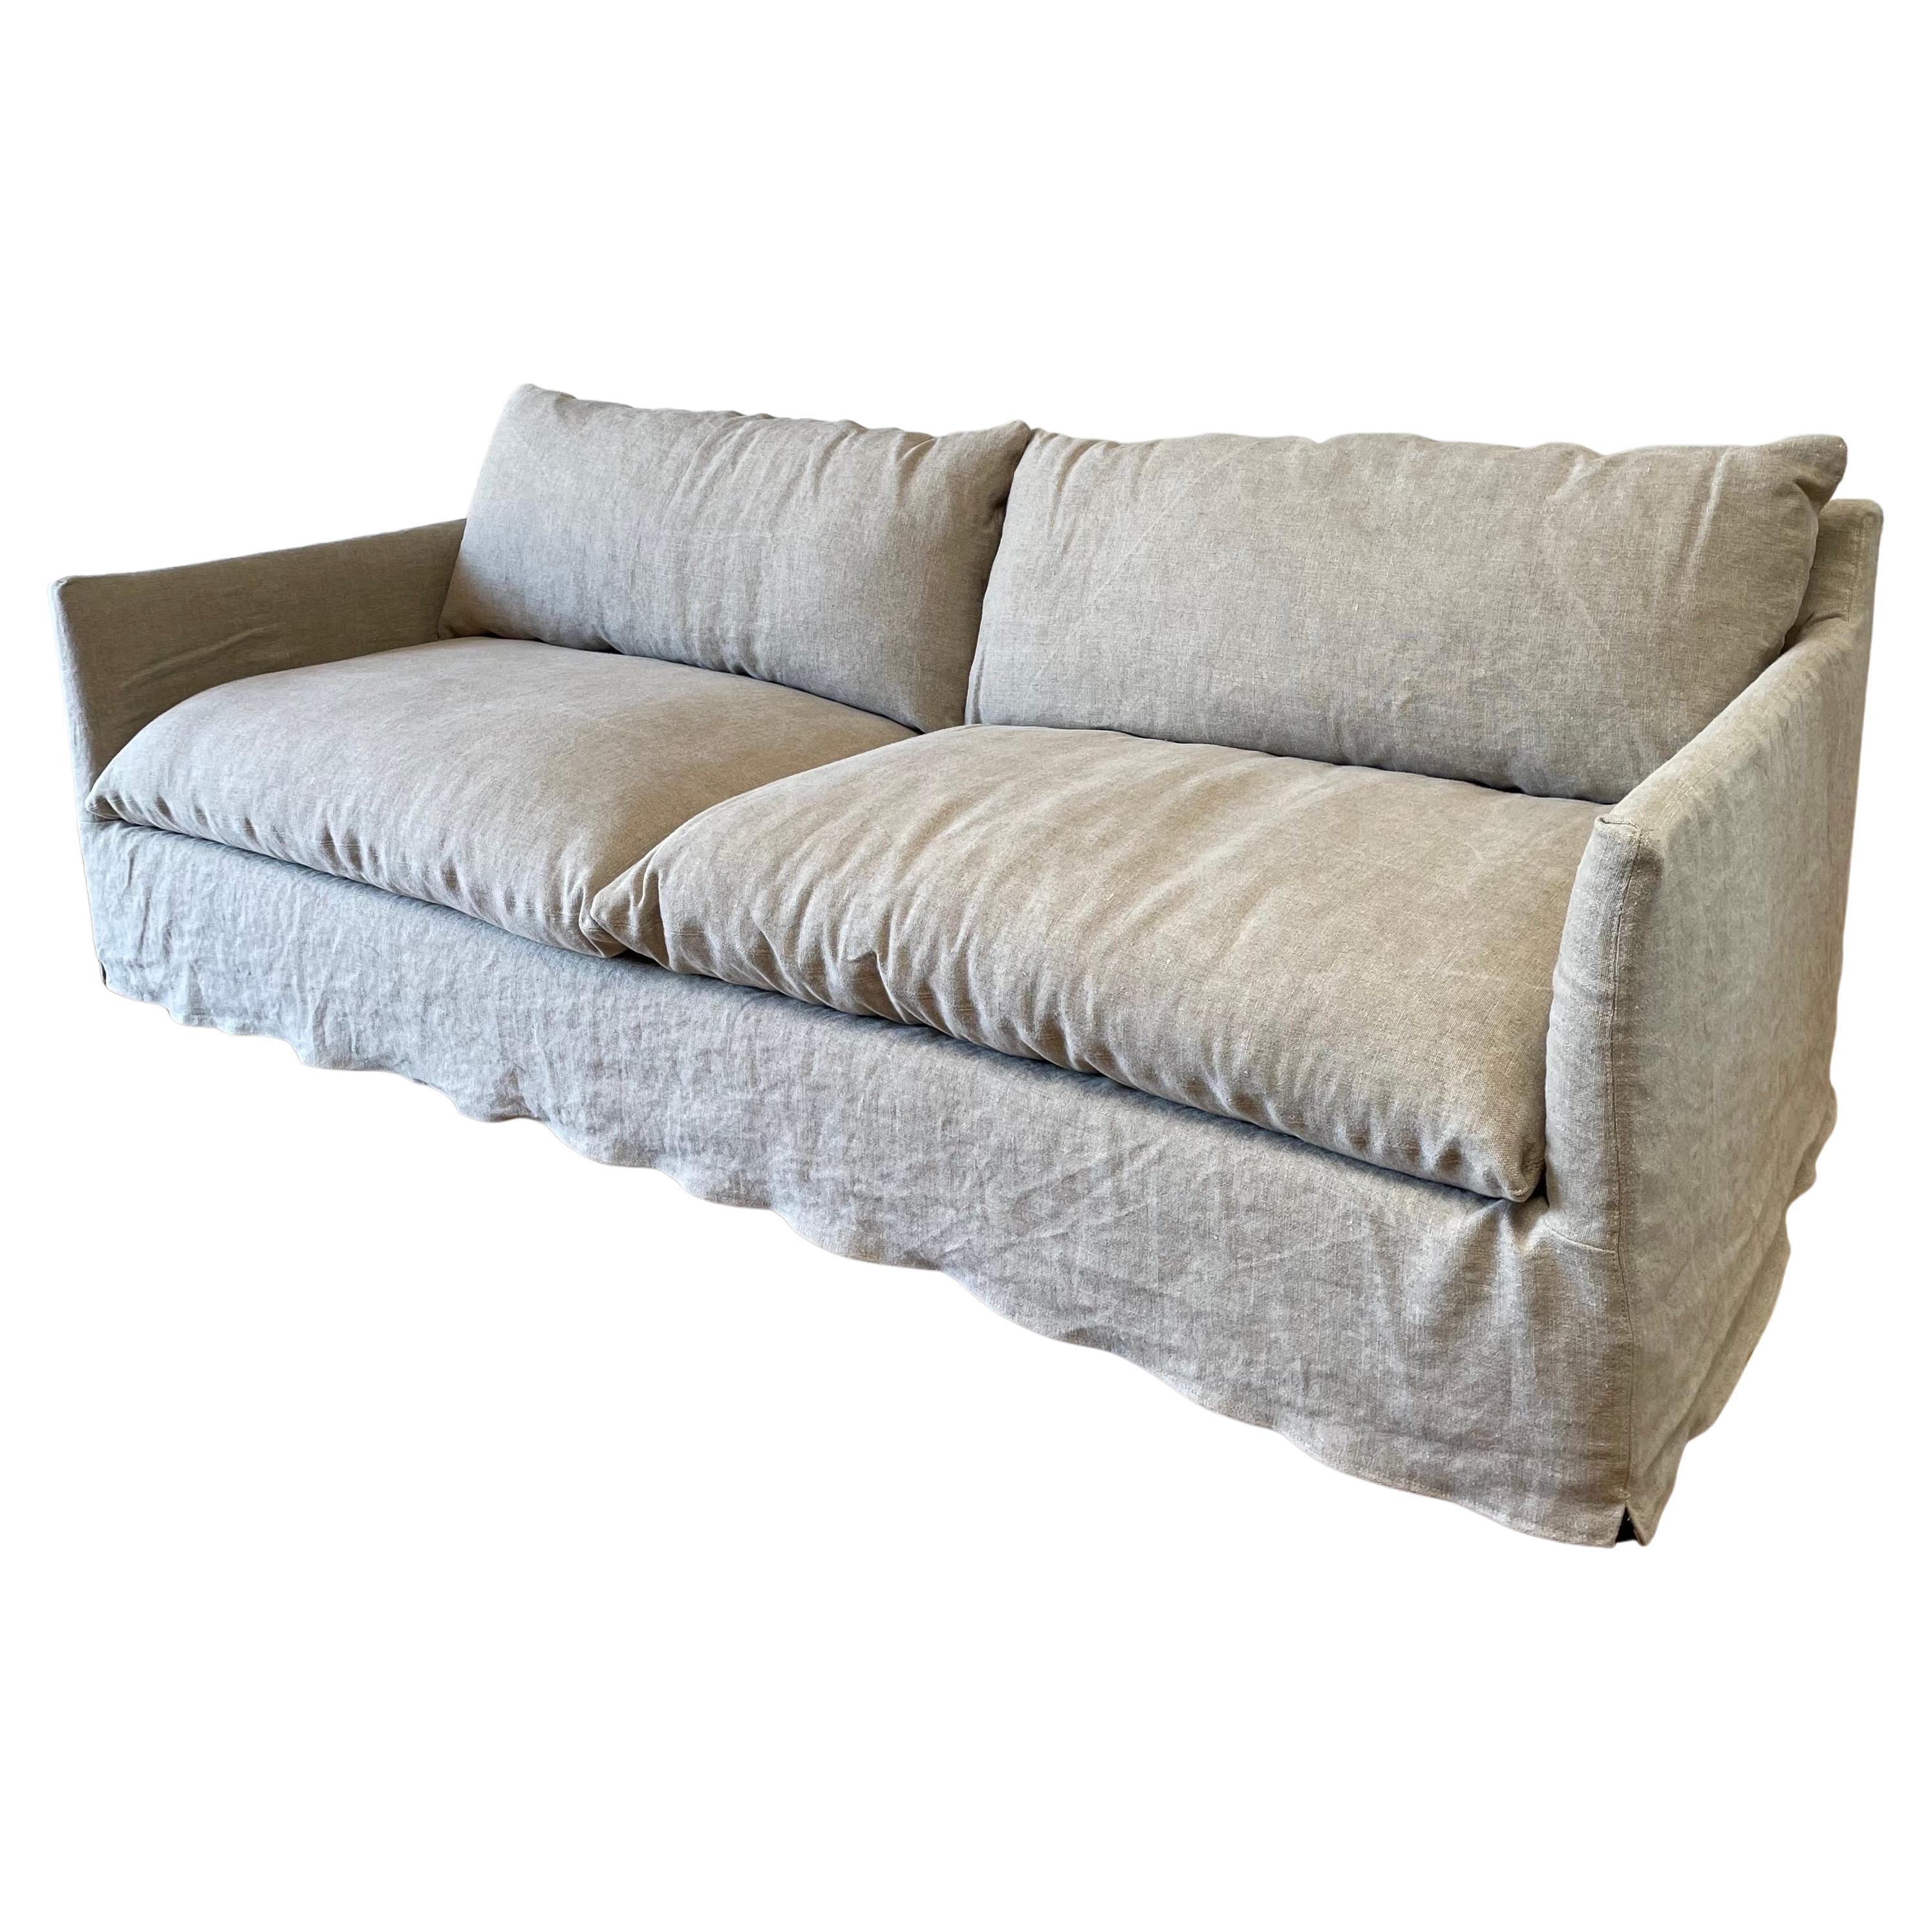 New Custom Stone Washed Irish Linen Slip Covered Sofa with Down Alt Cushions